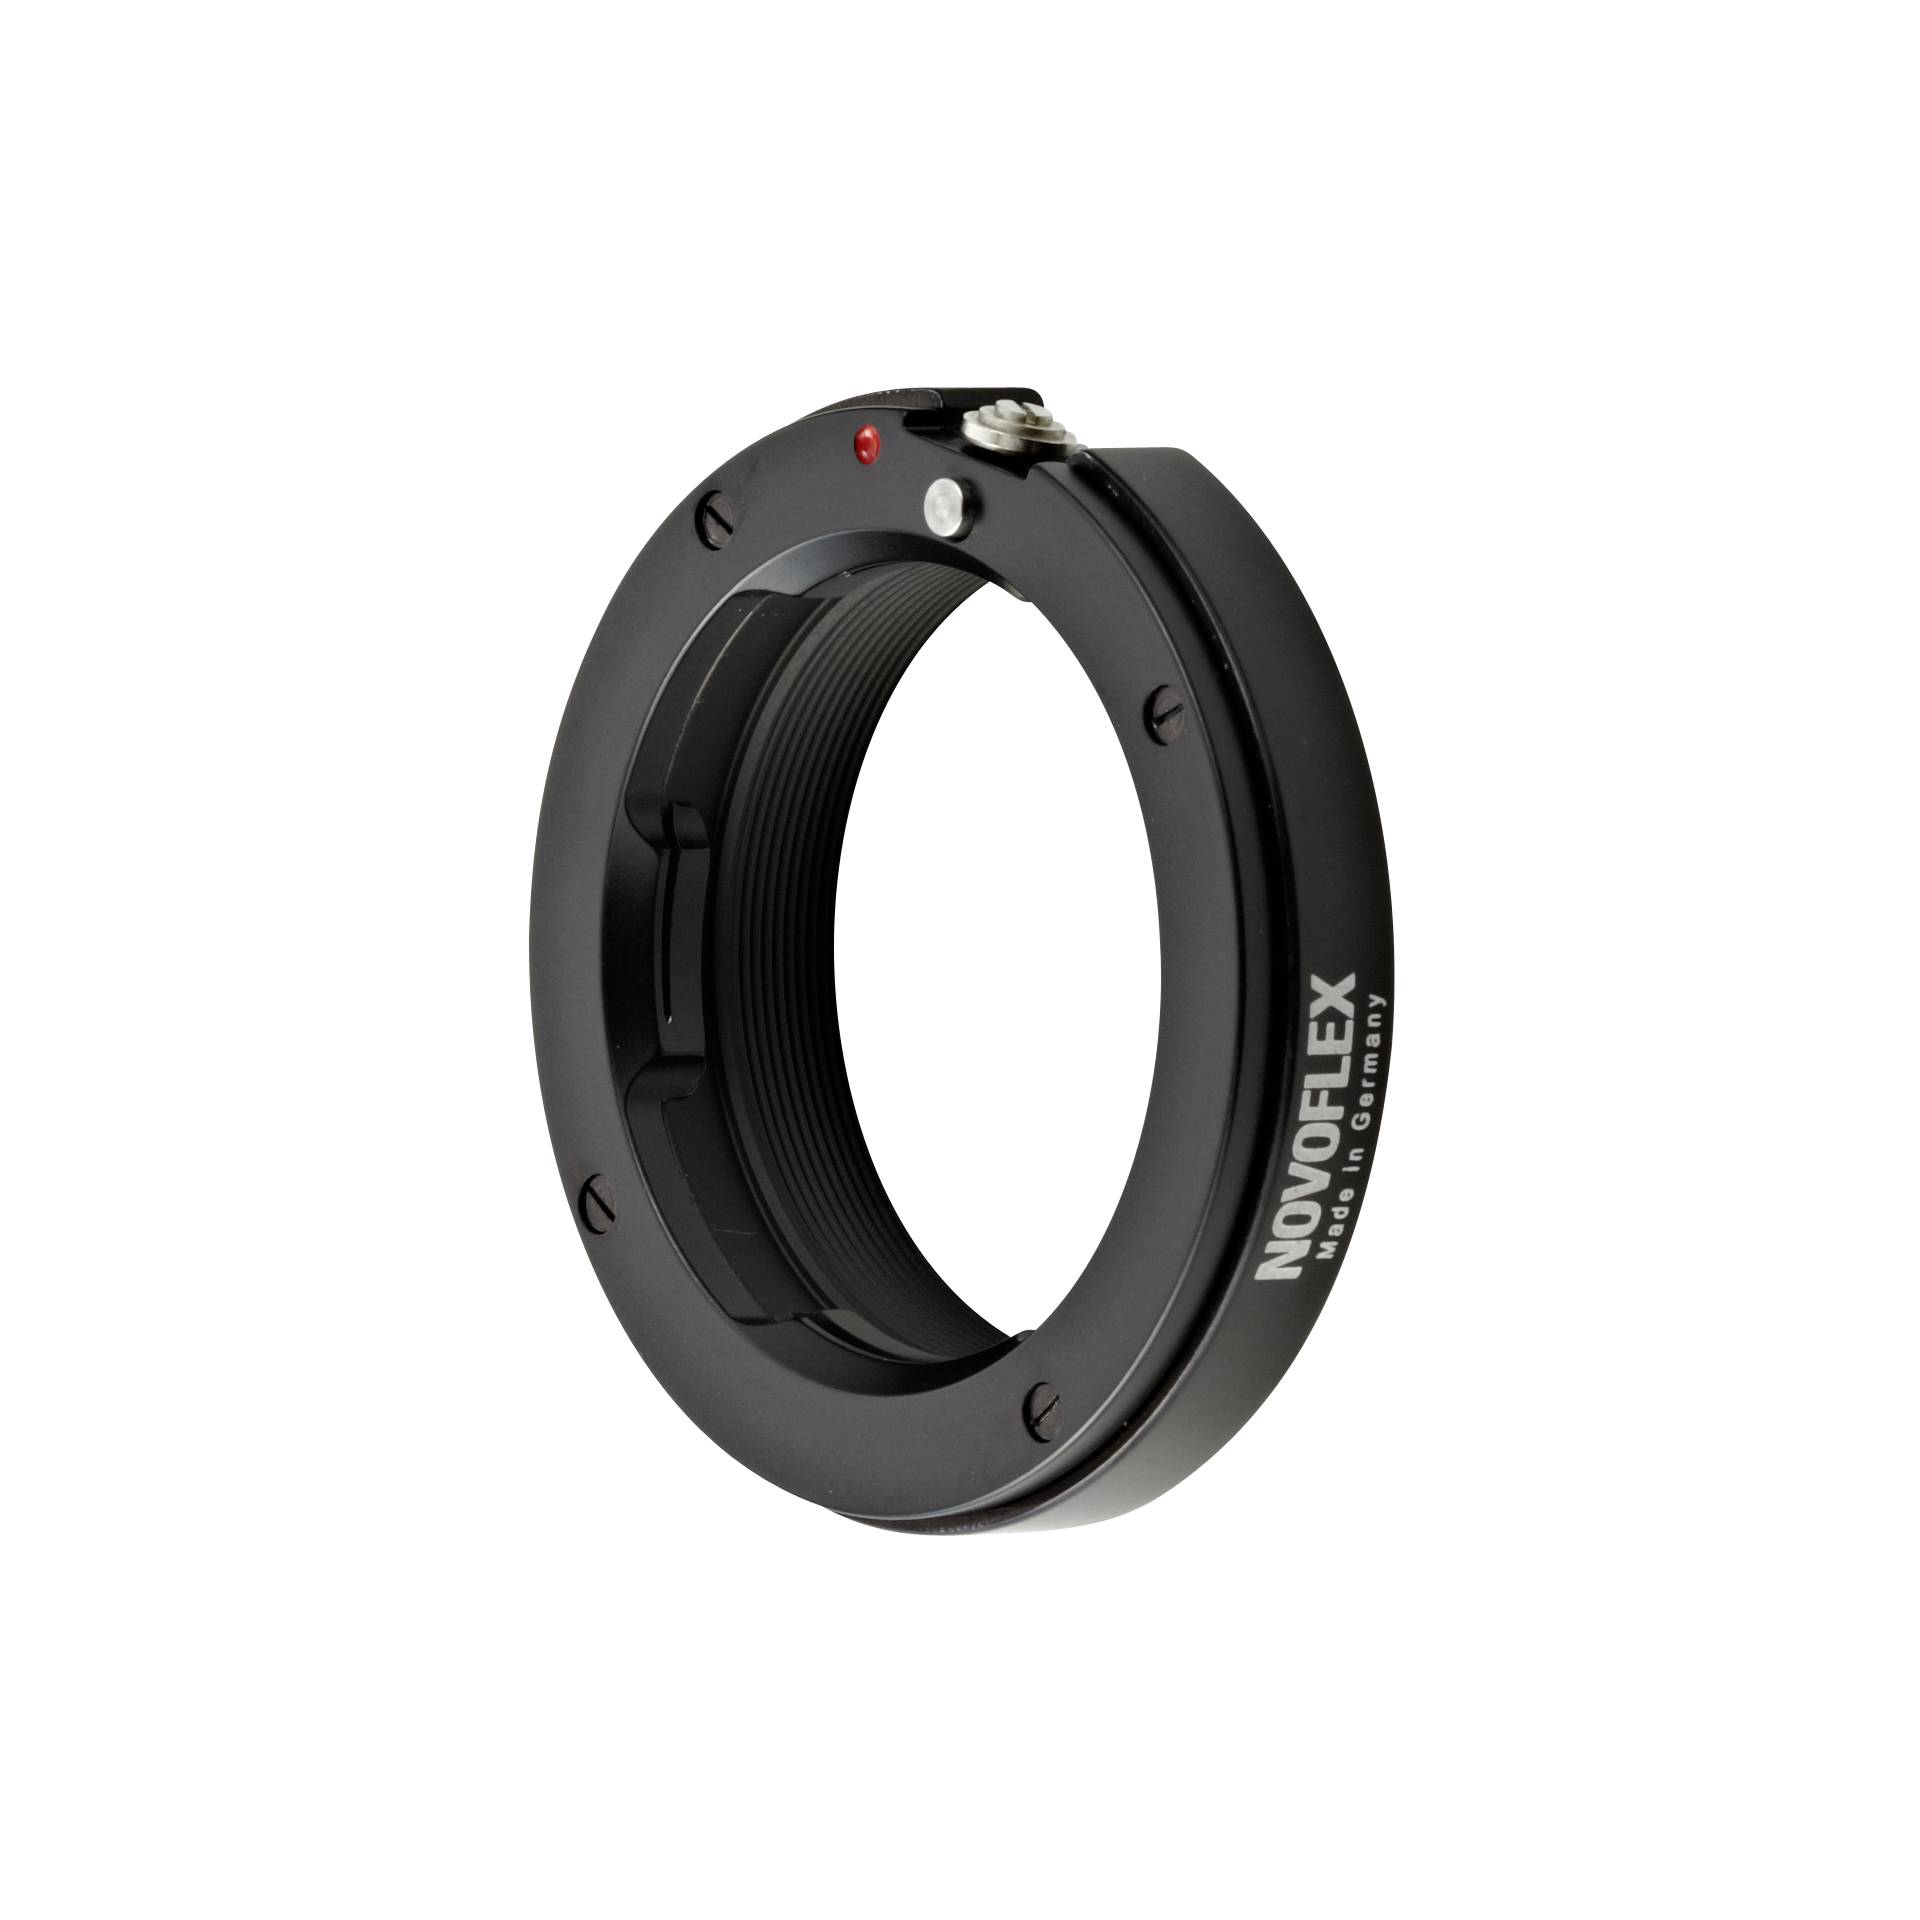 Novoflex adattatore Leica M obiettivo a Sony E Mount camera